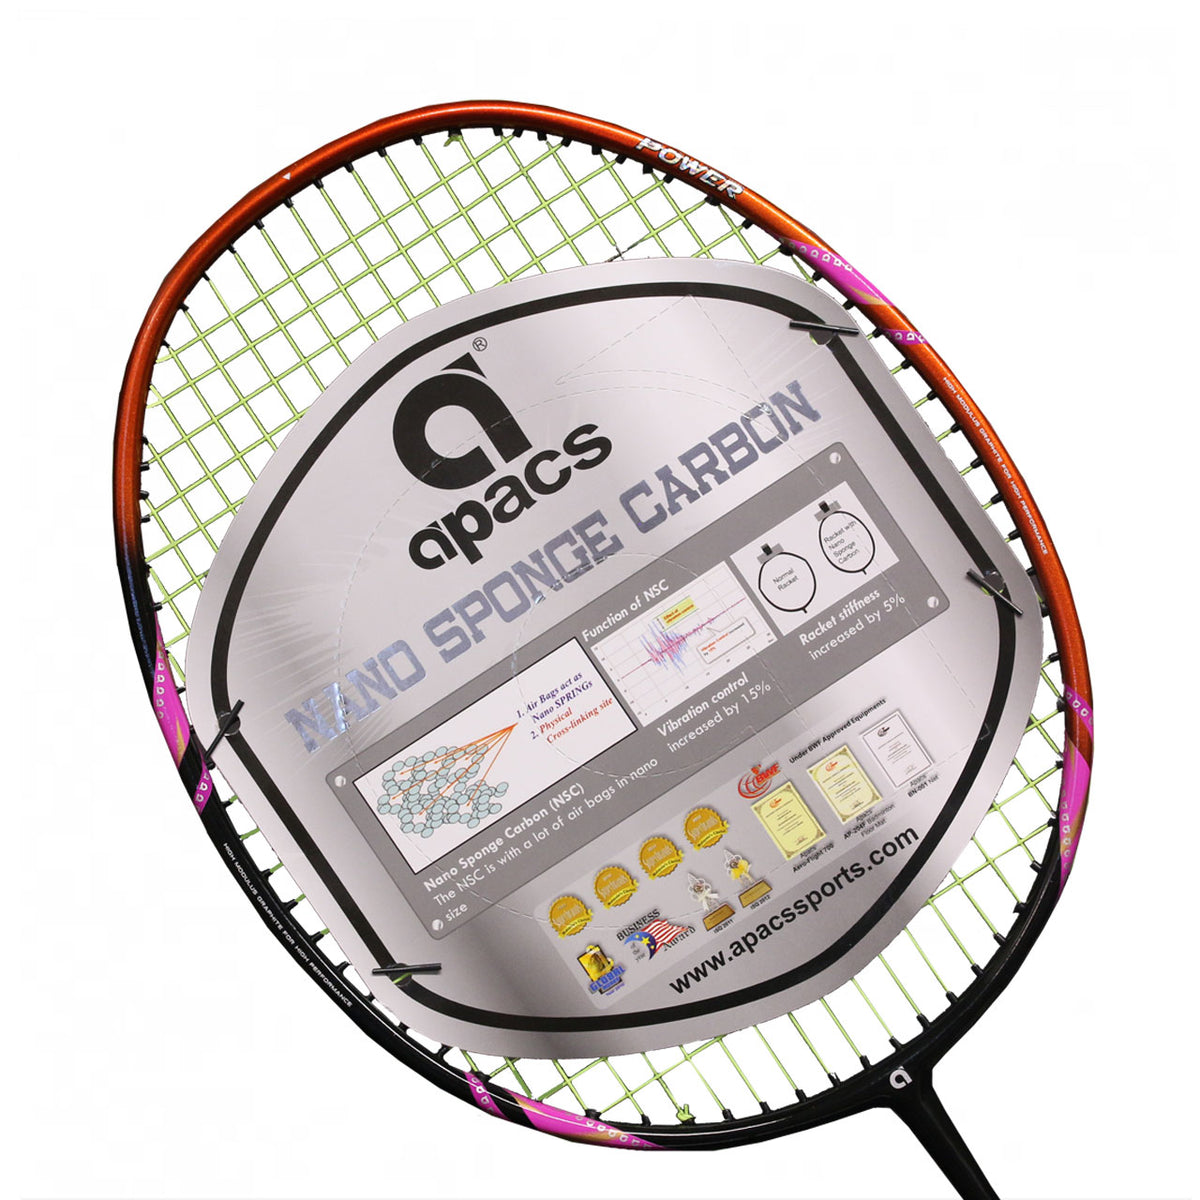 Apacs Accurate 99 Badminton Racket (Strung)